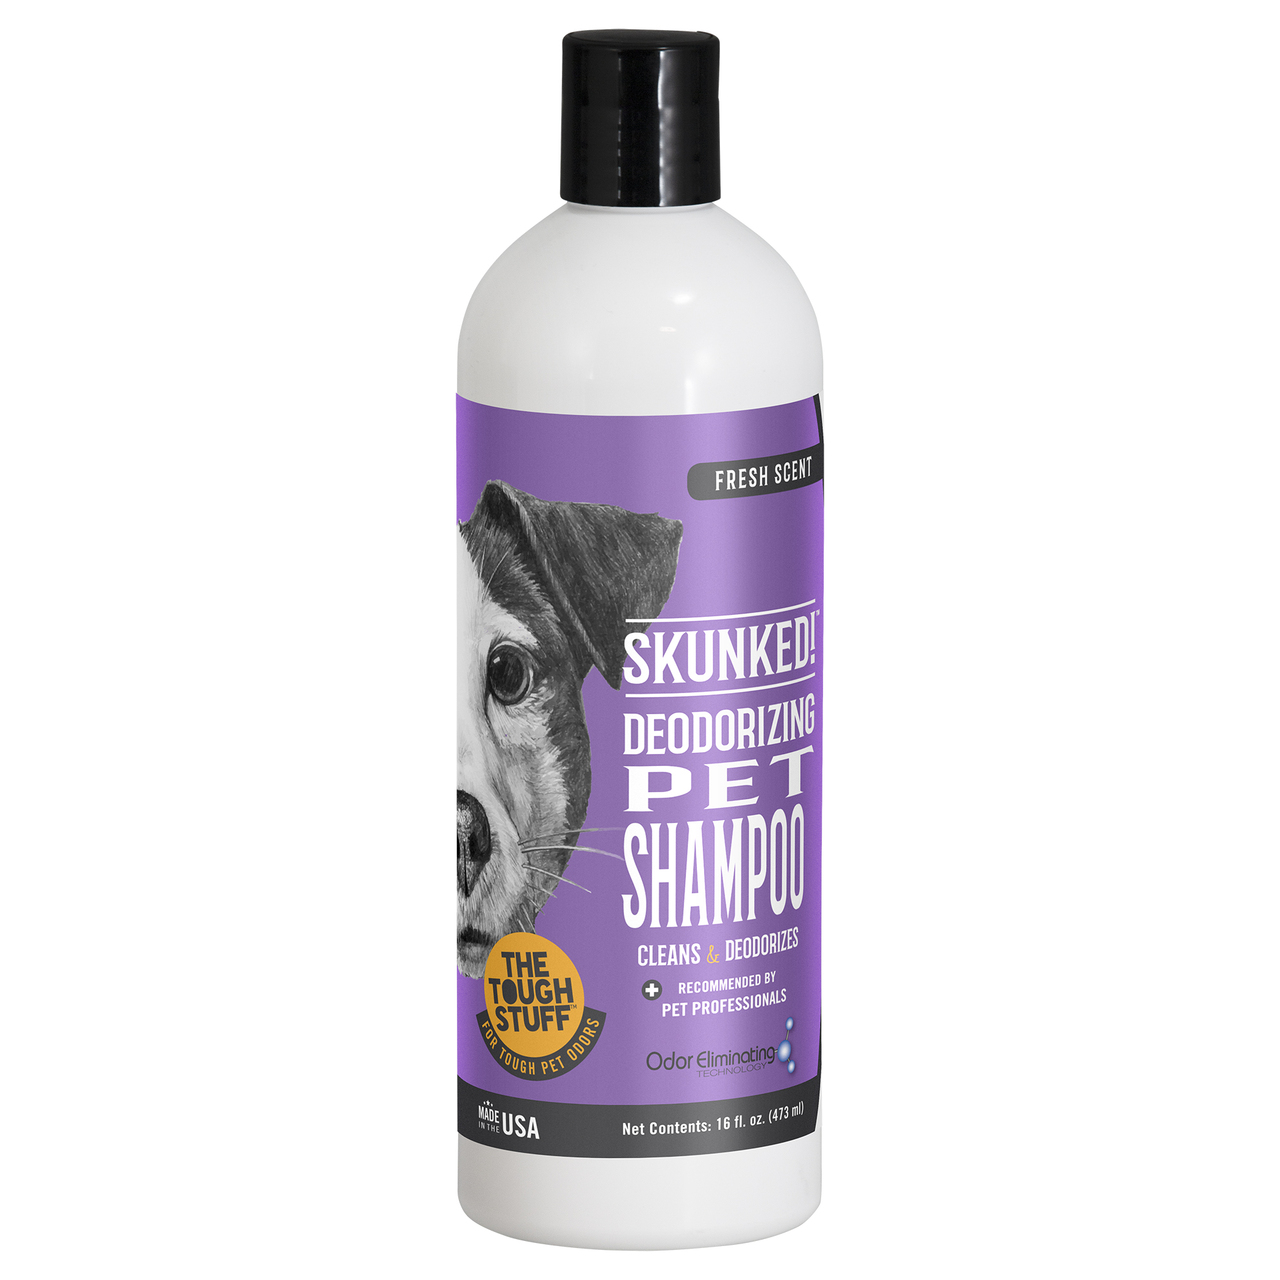 SKUNKED! Deodorizing Pet Shampoo